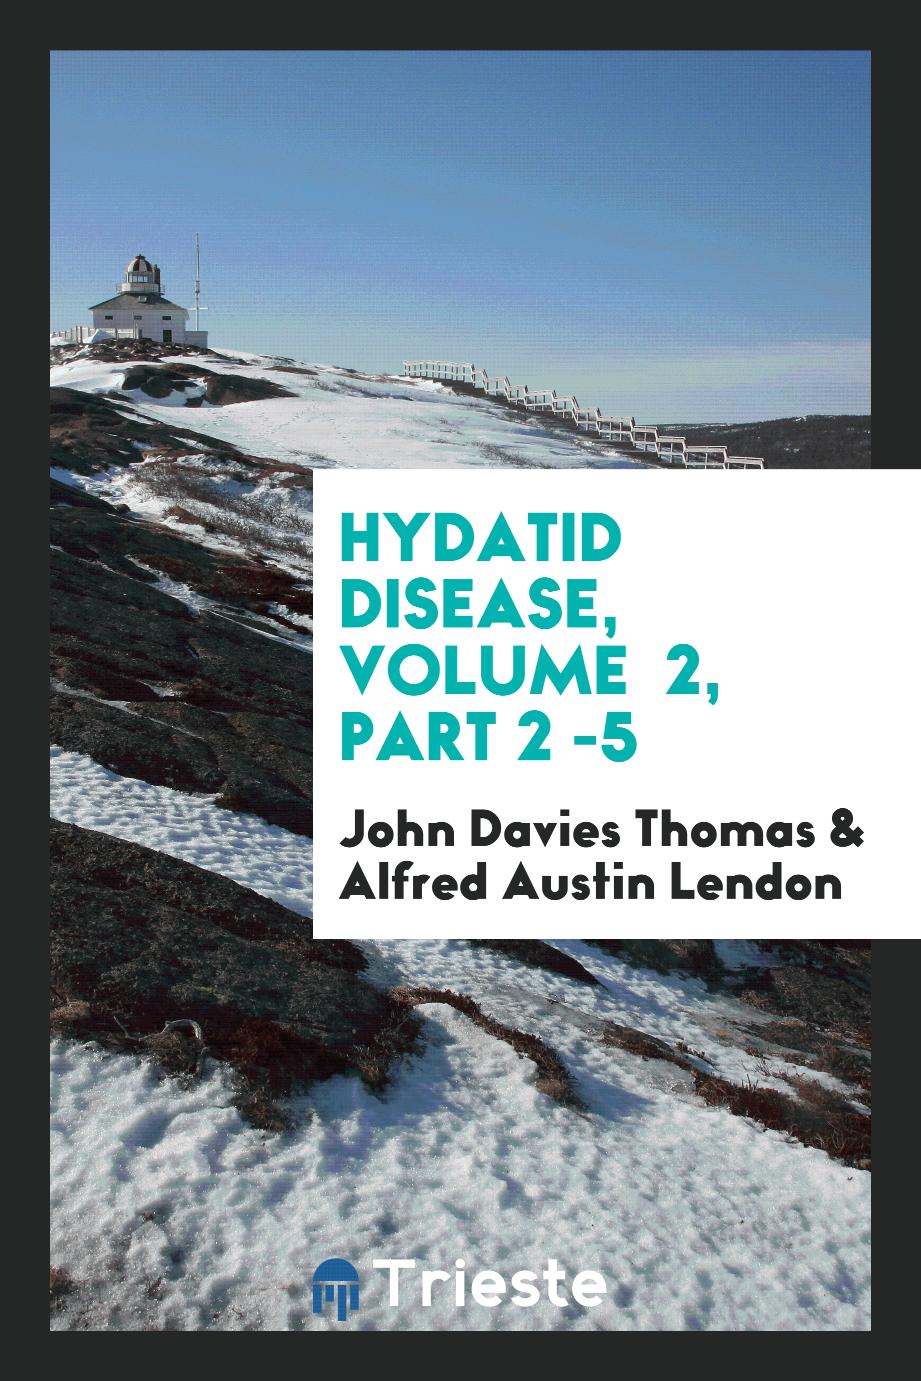 Hydatid disease, Volume 2, Part 2 -5